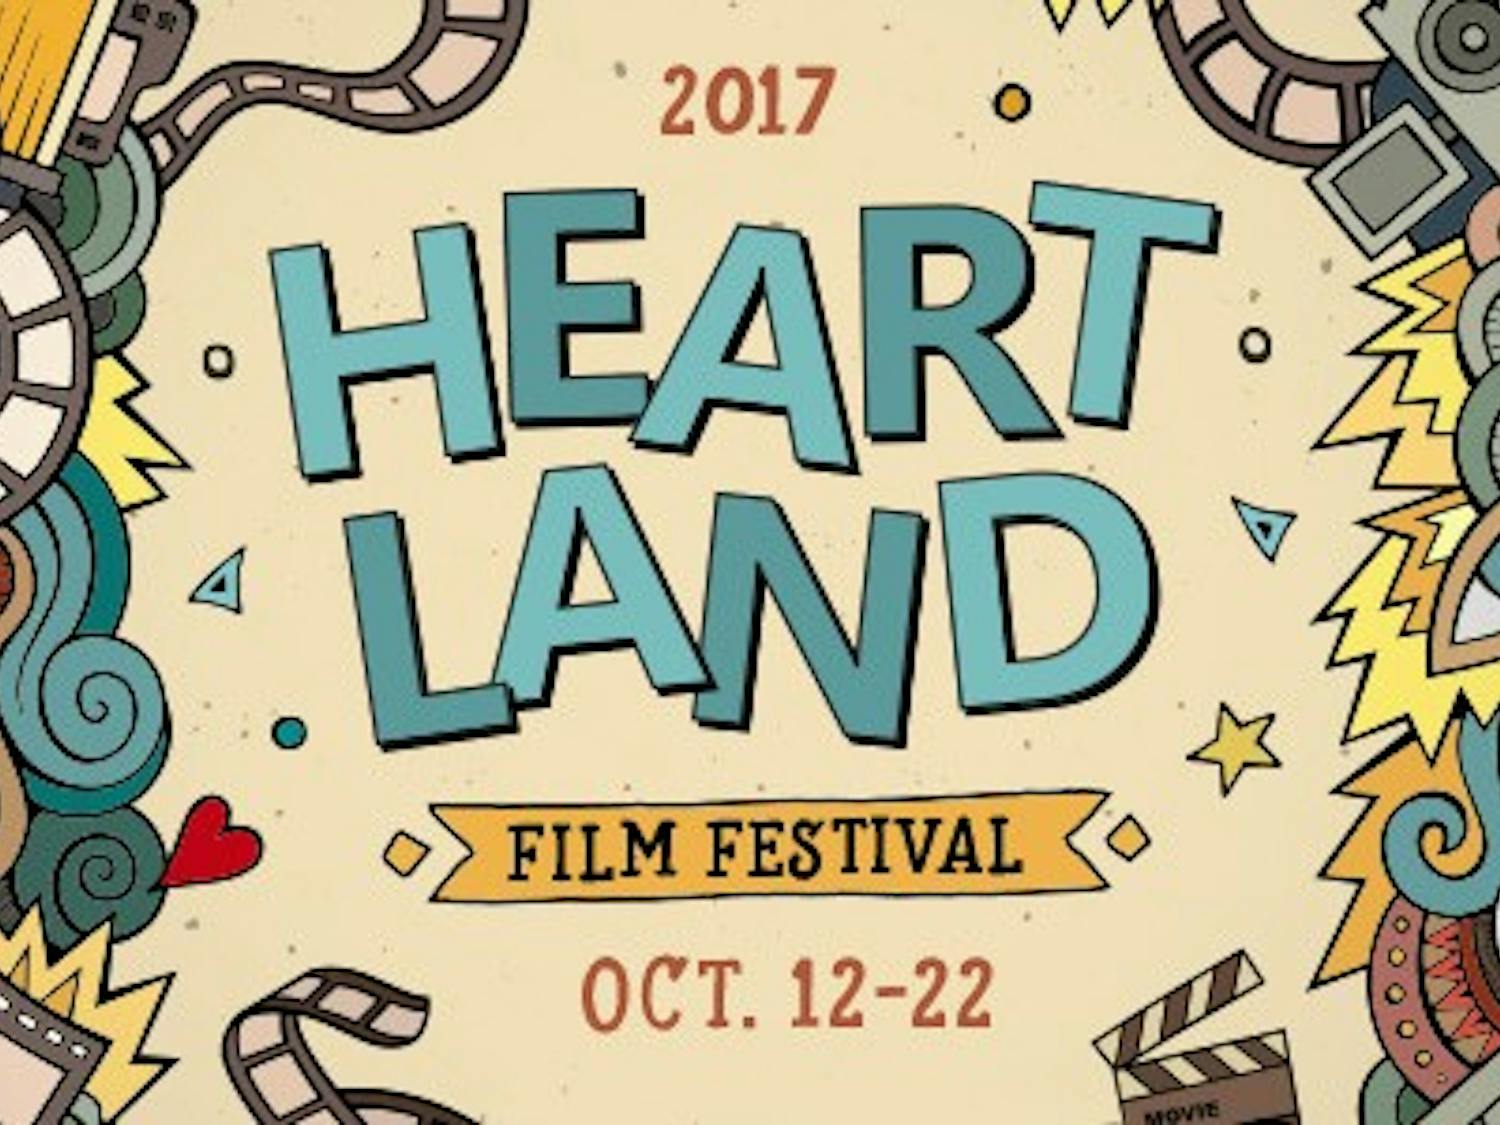 2017-heartland-film-festival-700x300.jpg